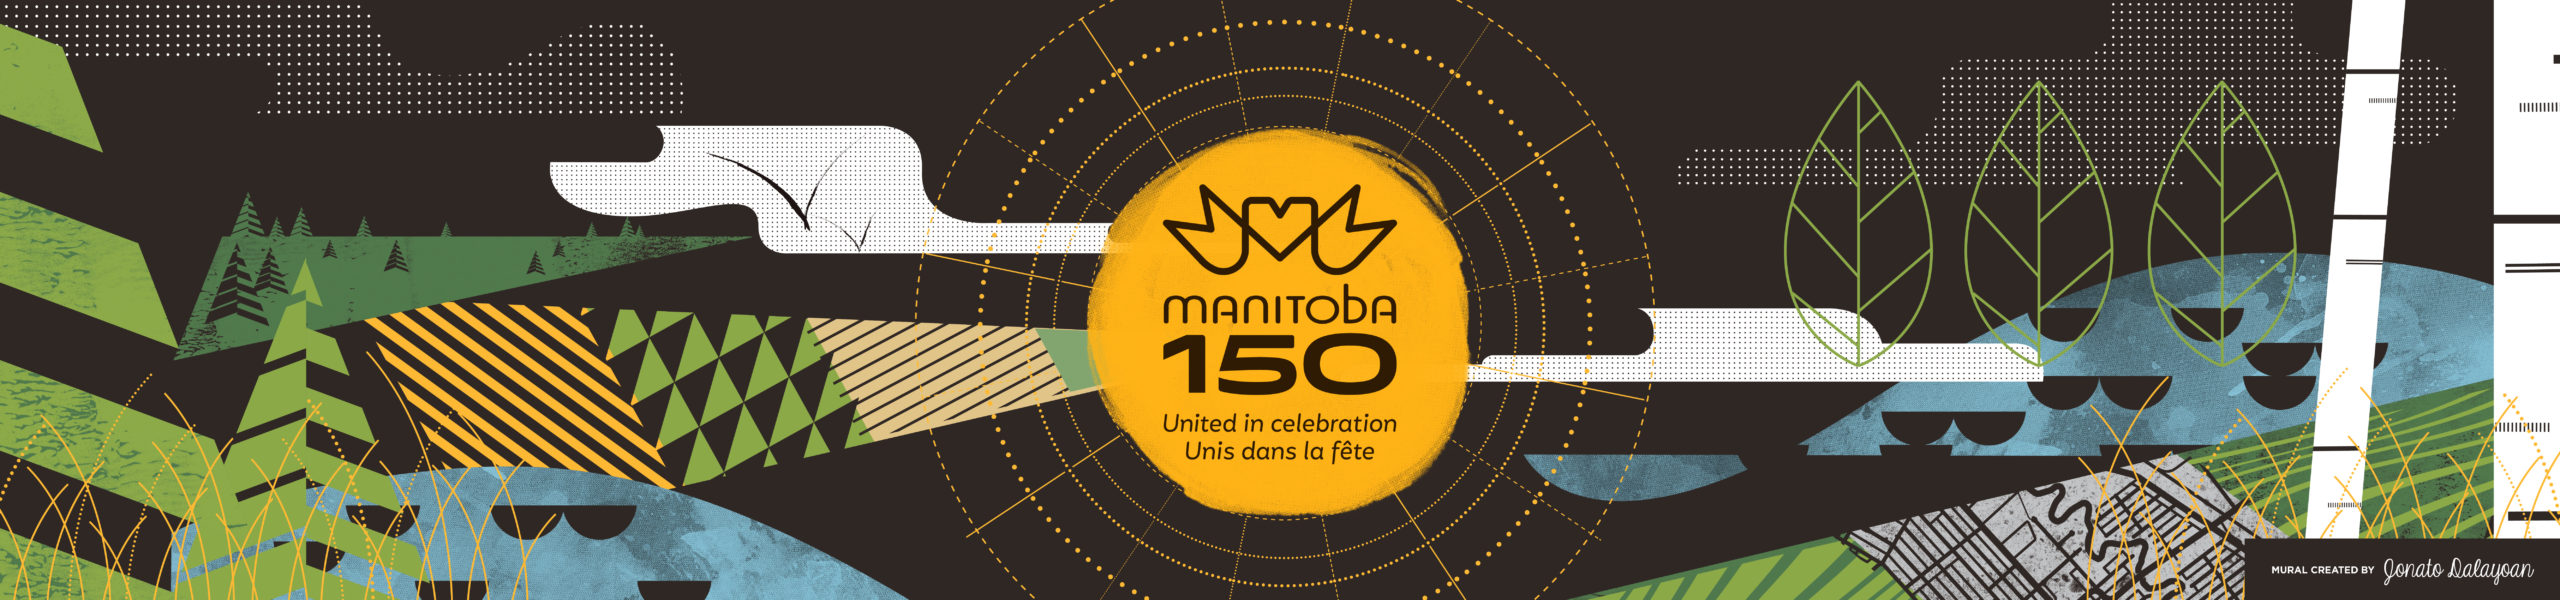 Manitoba 150 | United in celebration • Unis dans la fête